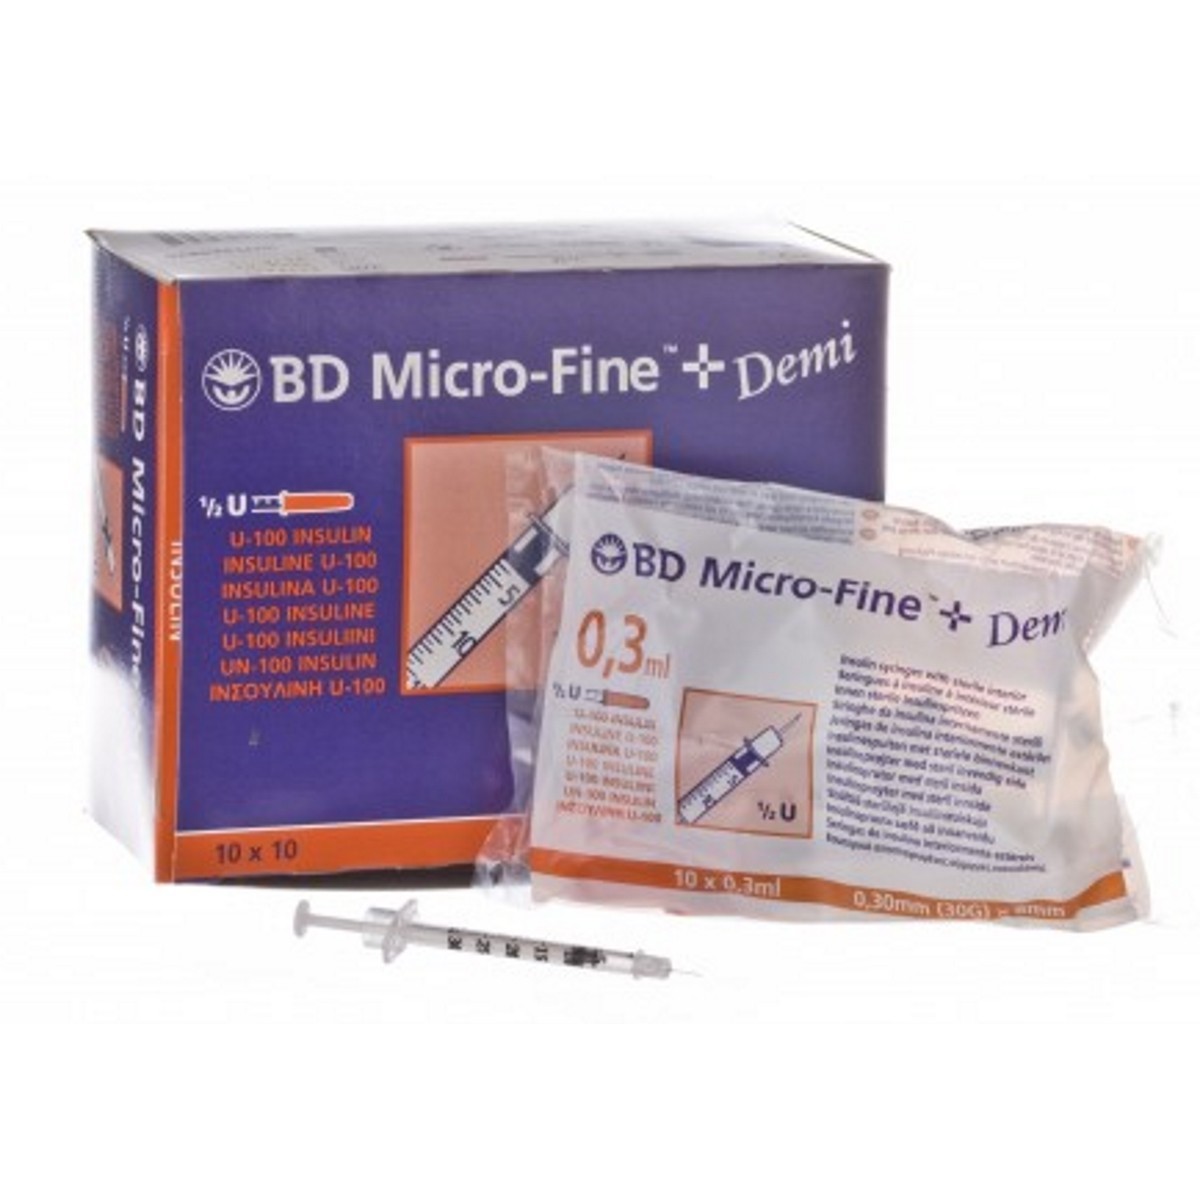 Microfine Demi 0 3ml U100 Insulin Syringes Box Of 100 From 17 54